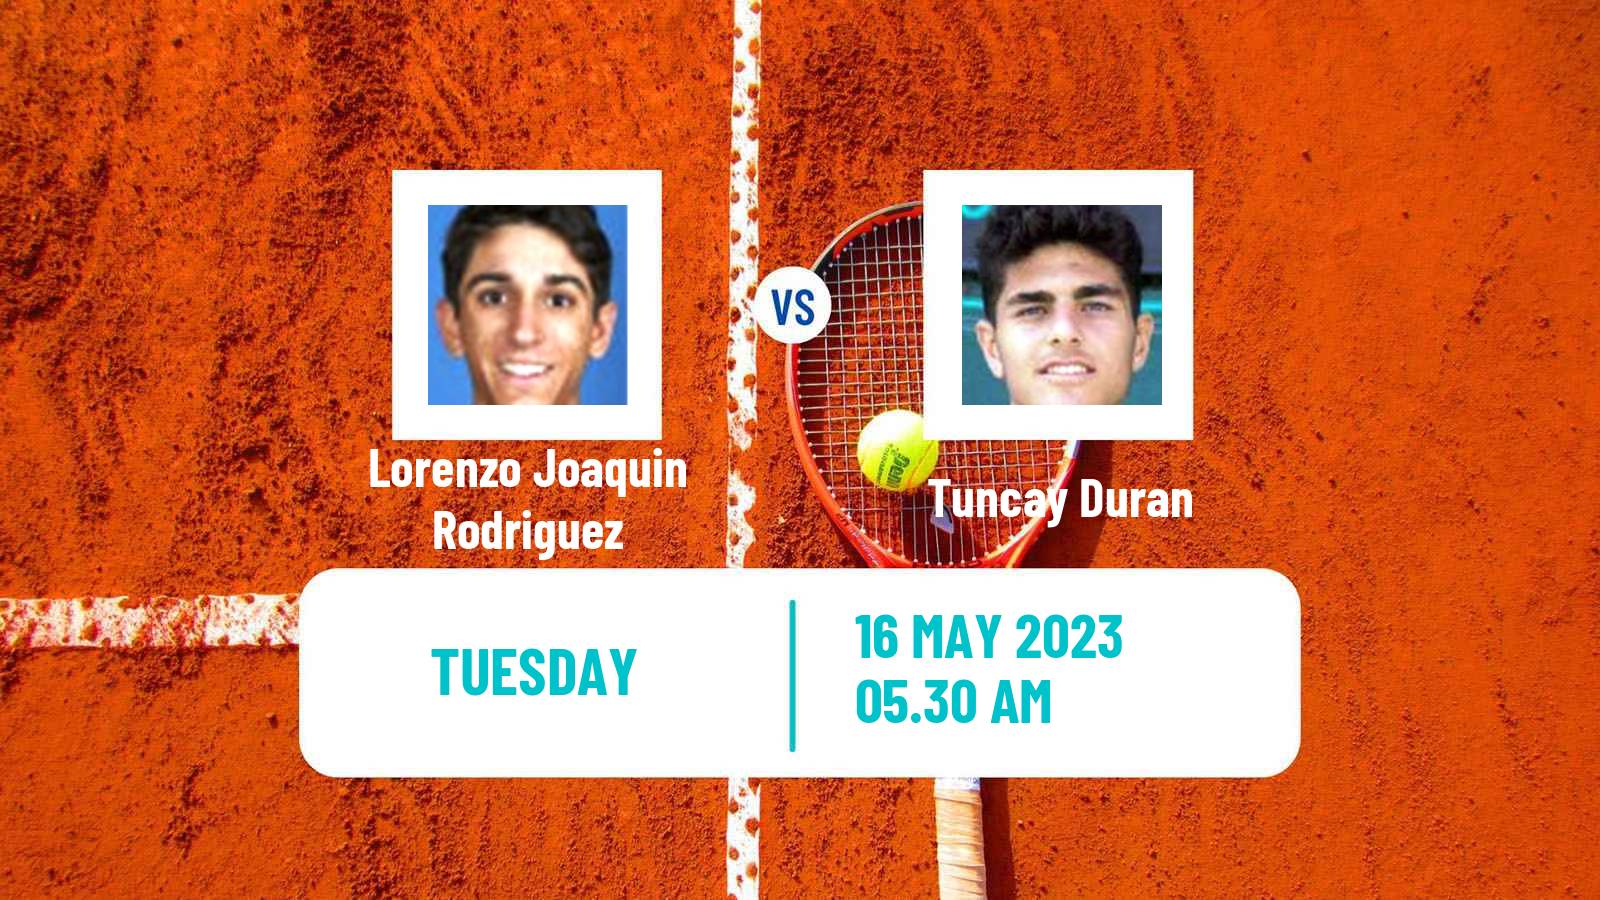 Tennis ITF M15 Antalya 37 Men Lorenzo Joaquin Rodriguez - Tuncay Duran